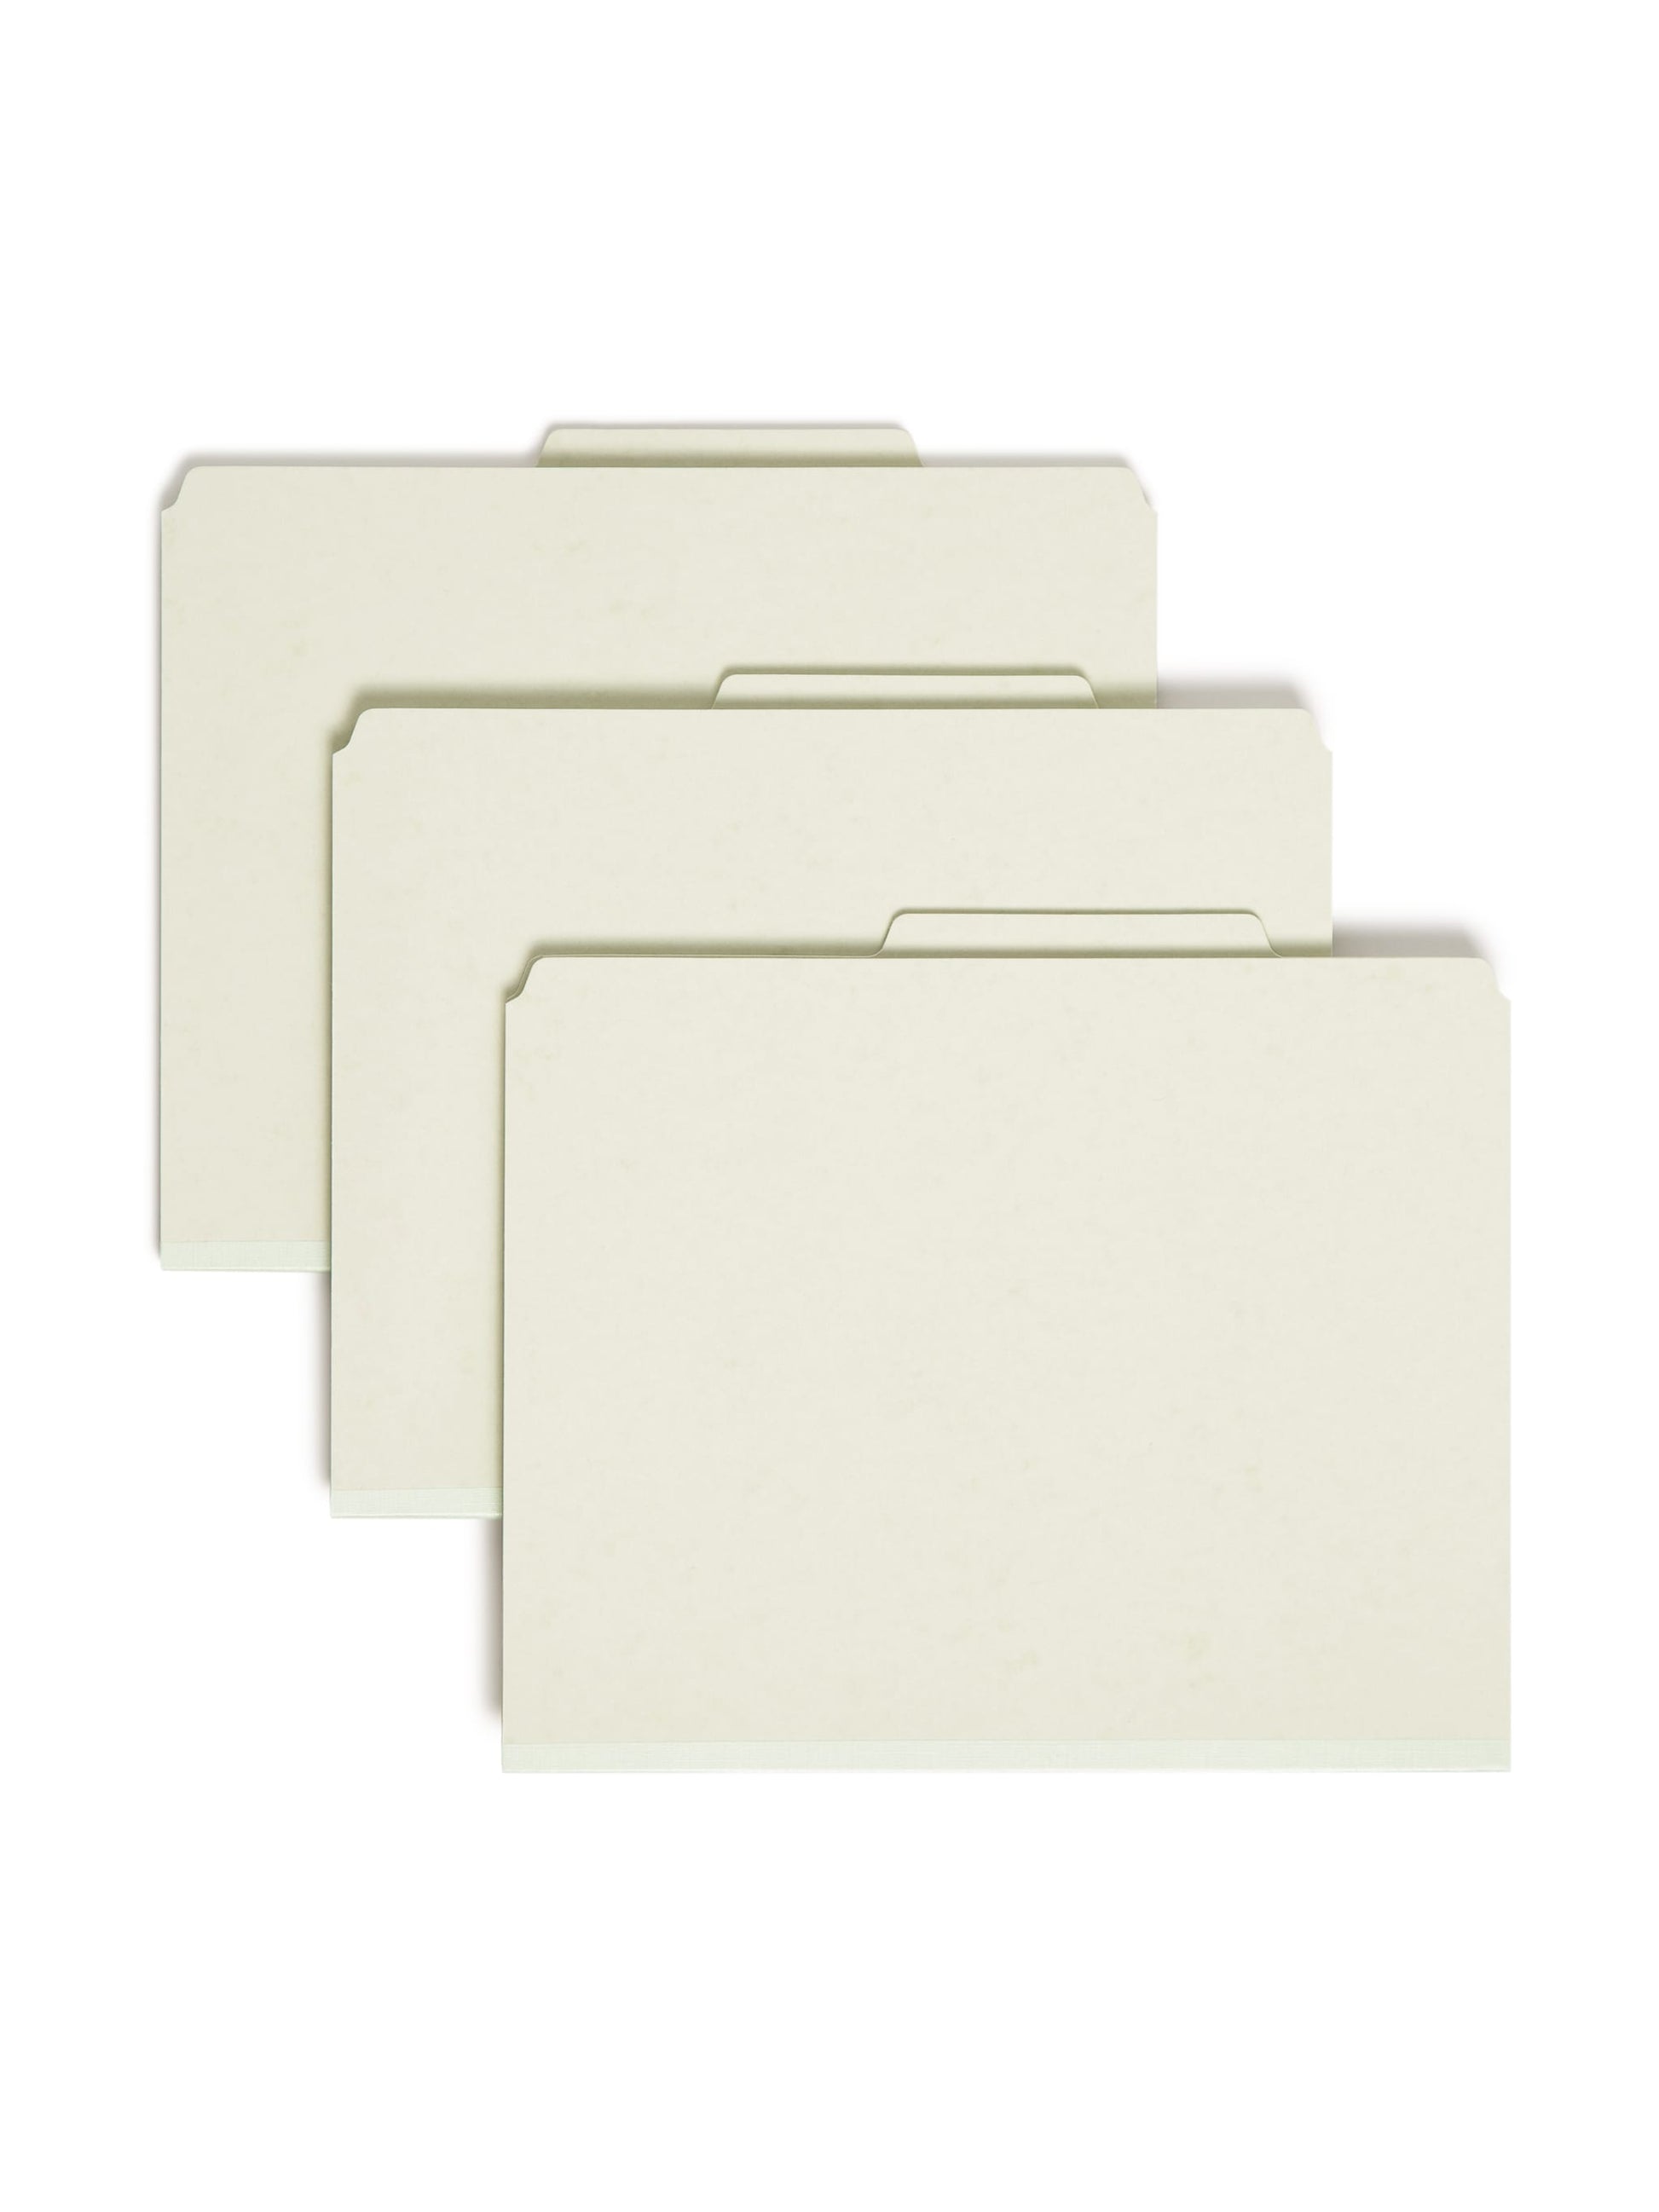 SafeSHIELD® Pressboard Classification File Folders, 1 Divider, 2 inch Expansion, Gray/Green Color, Letter Size, Set of 0, 30086486137769